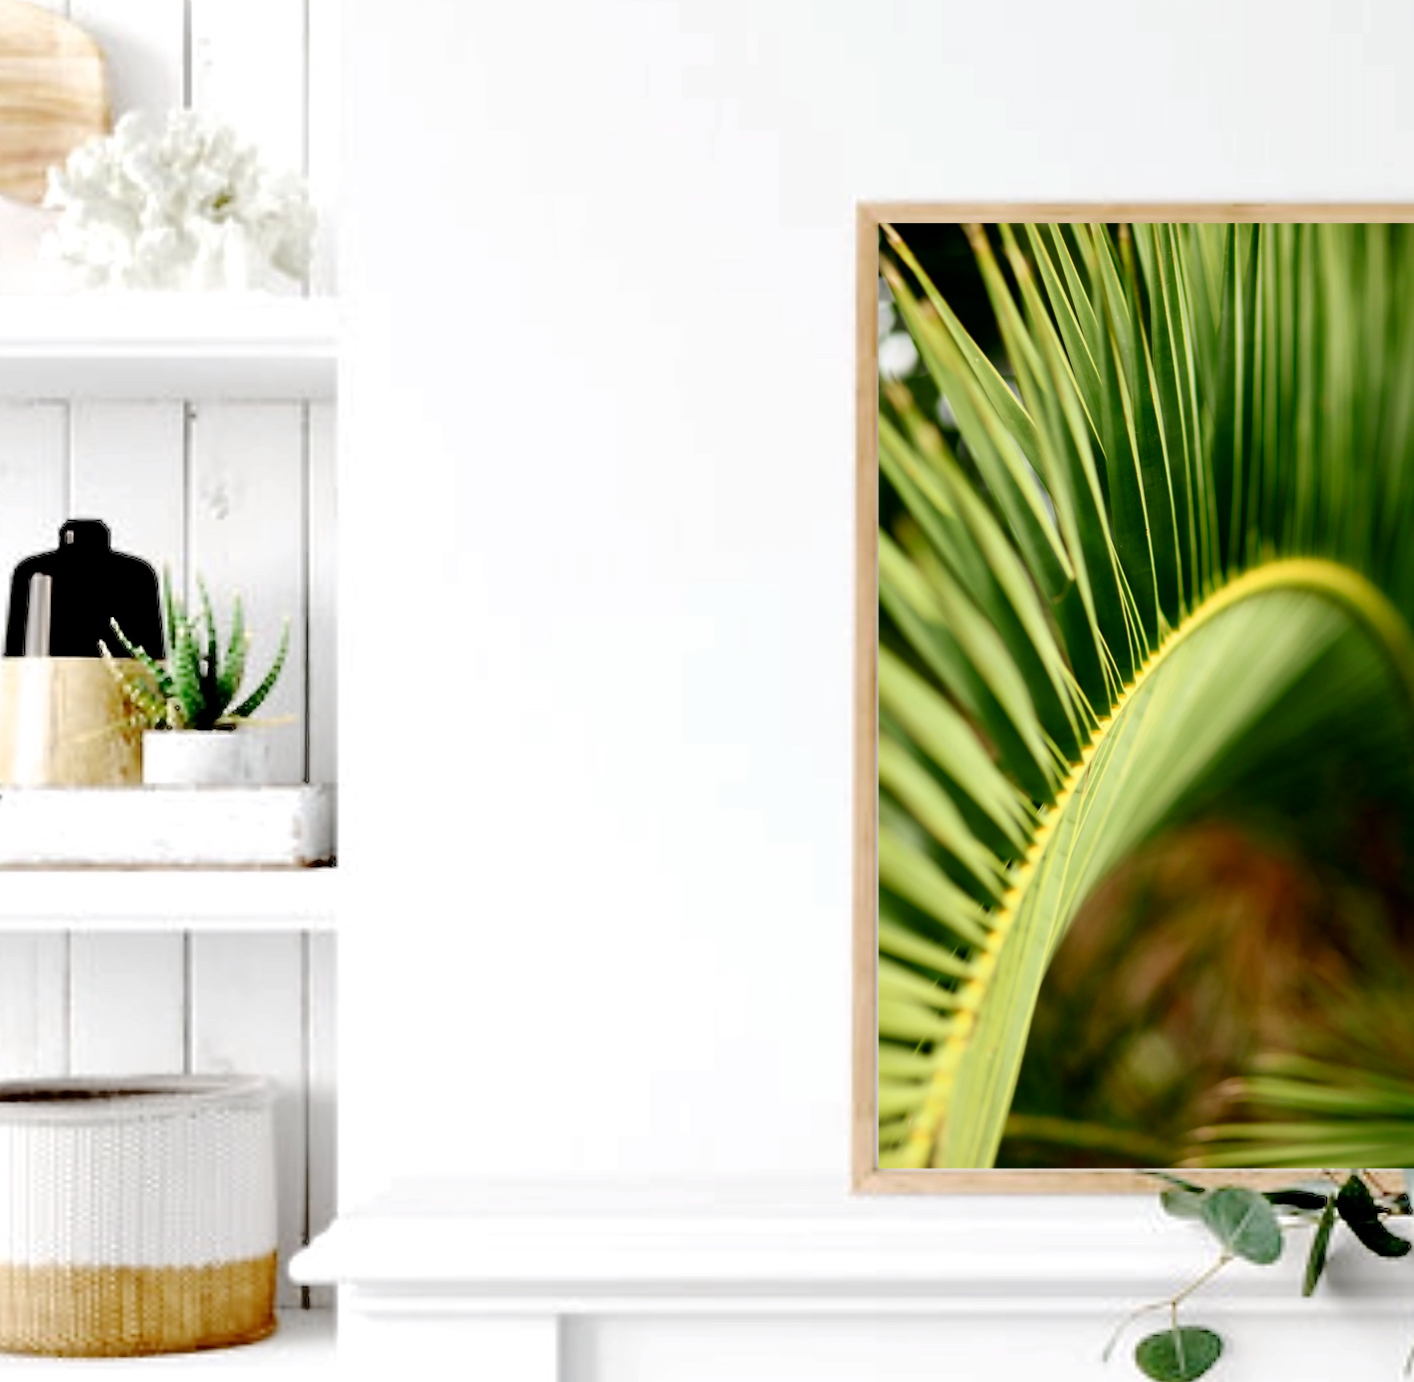 Palm Tree Sway • FinenPhotography Print • Kirribilli Sydney Australia • Tropical Coastal Wall Art